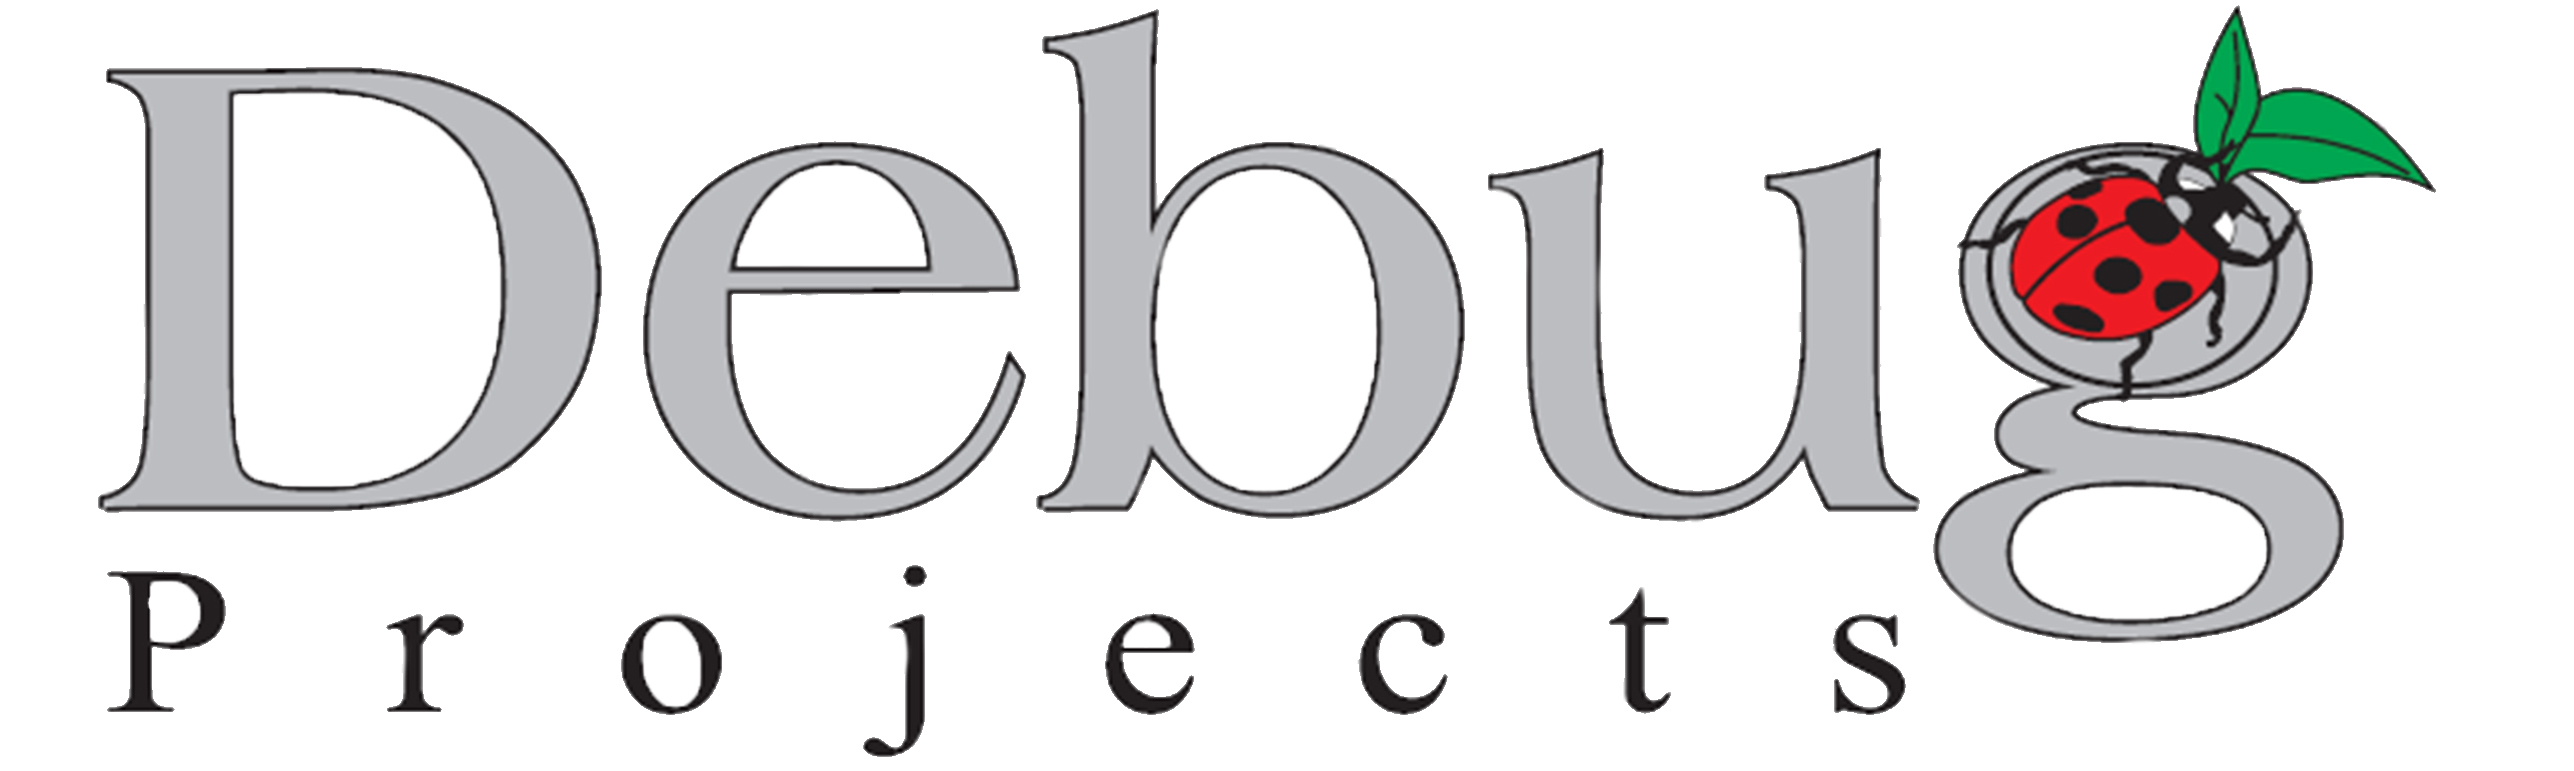 Debug Project Logo